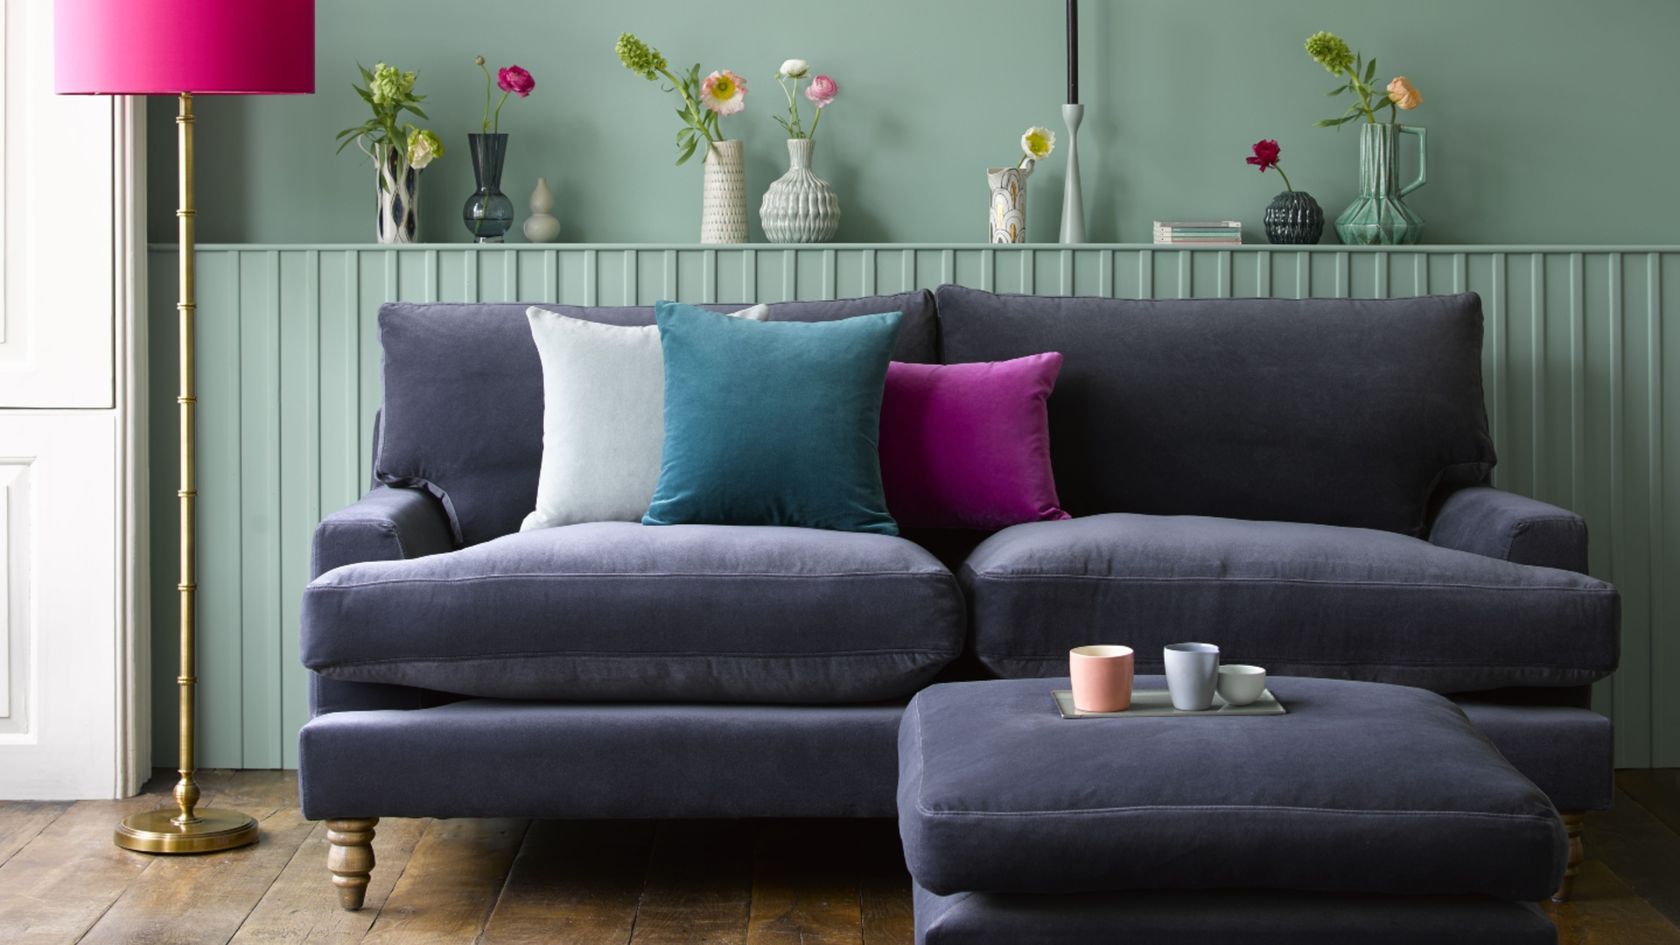 10 best sofa beds independent